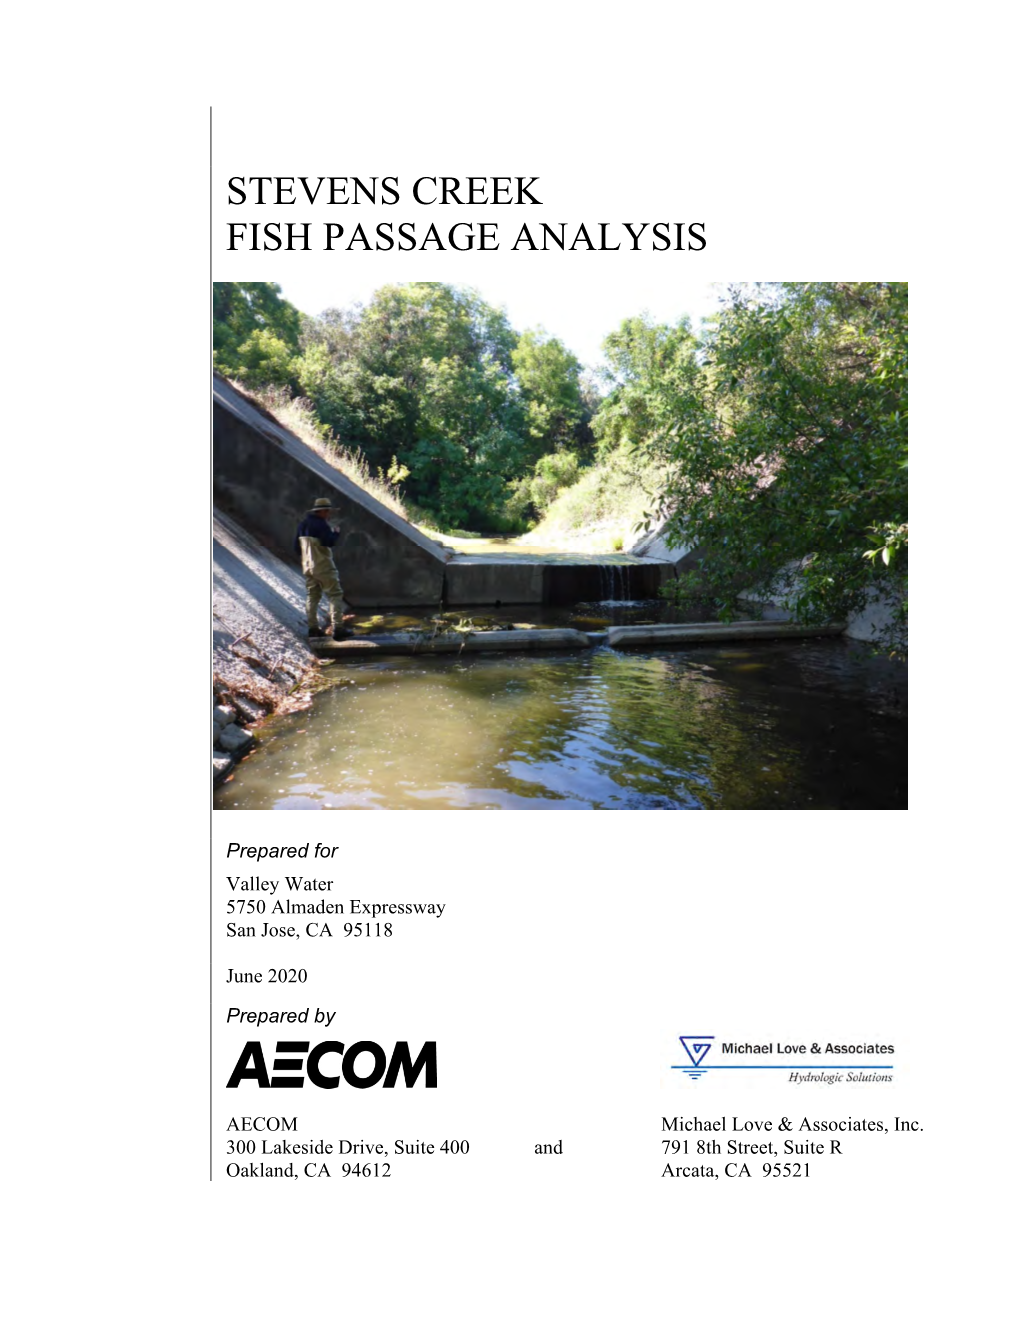 Stevens Creek Fish Passage Analysis